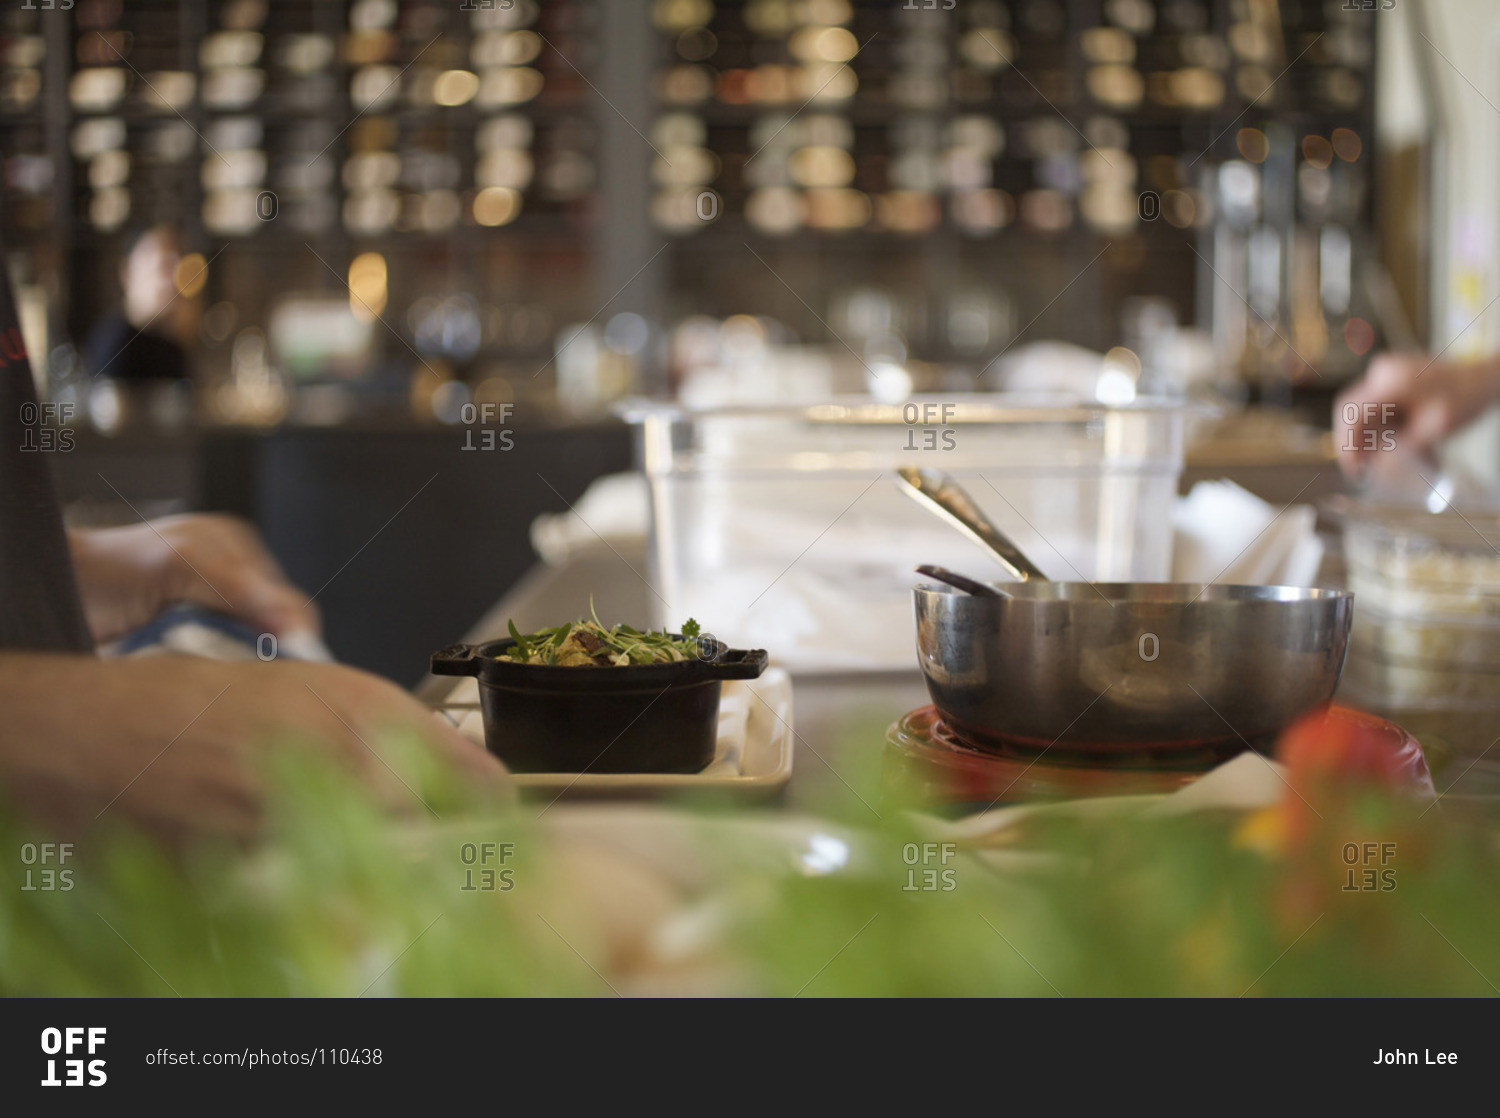 Person preparing food in a cast iron pot dish